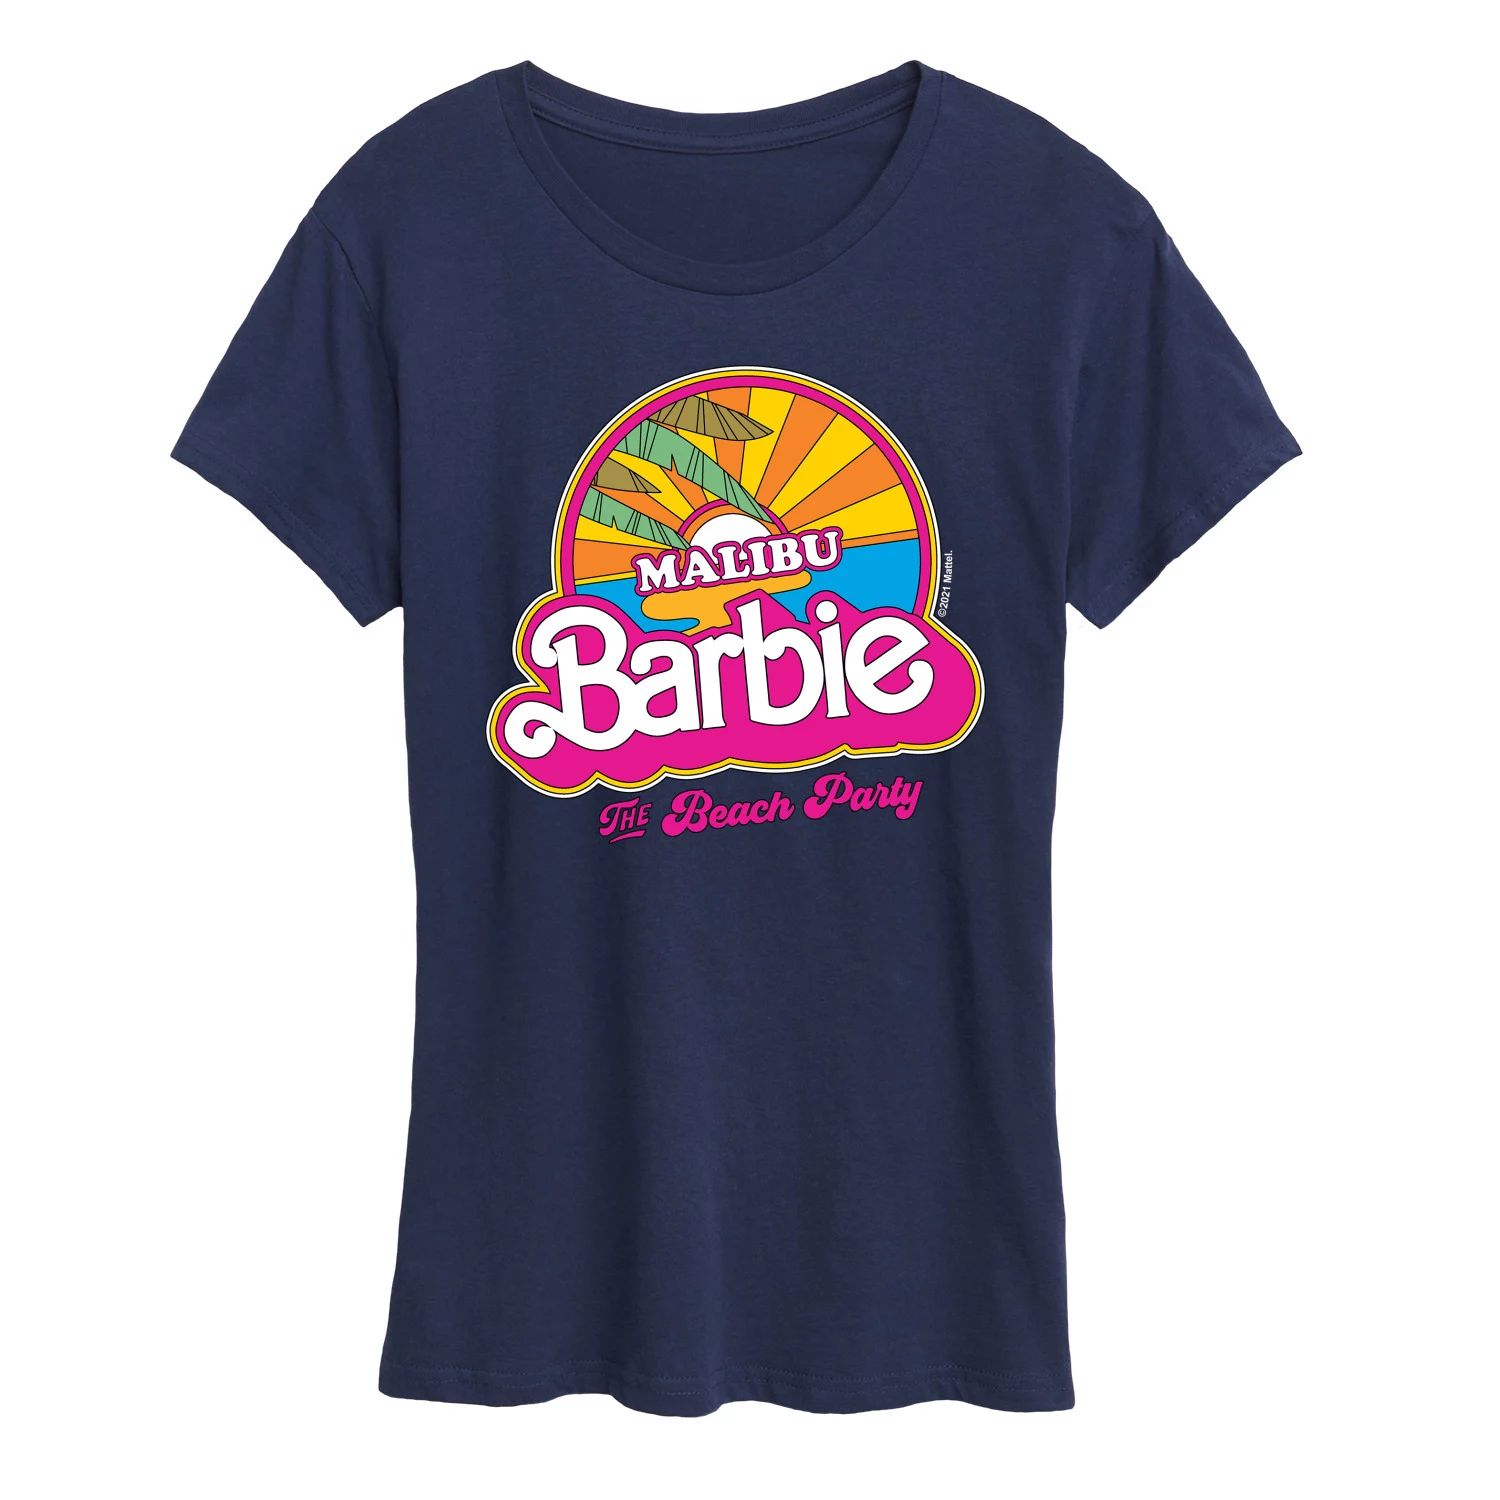 Футболка с рисунком Барби Малибу для юниоров Licensed Character, темно-синий футболка с рисунком барби малибу для юниоров licensed character